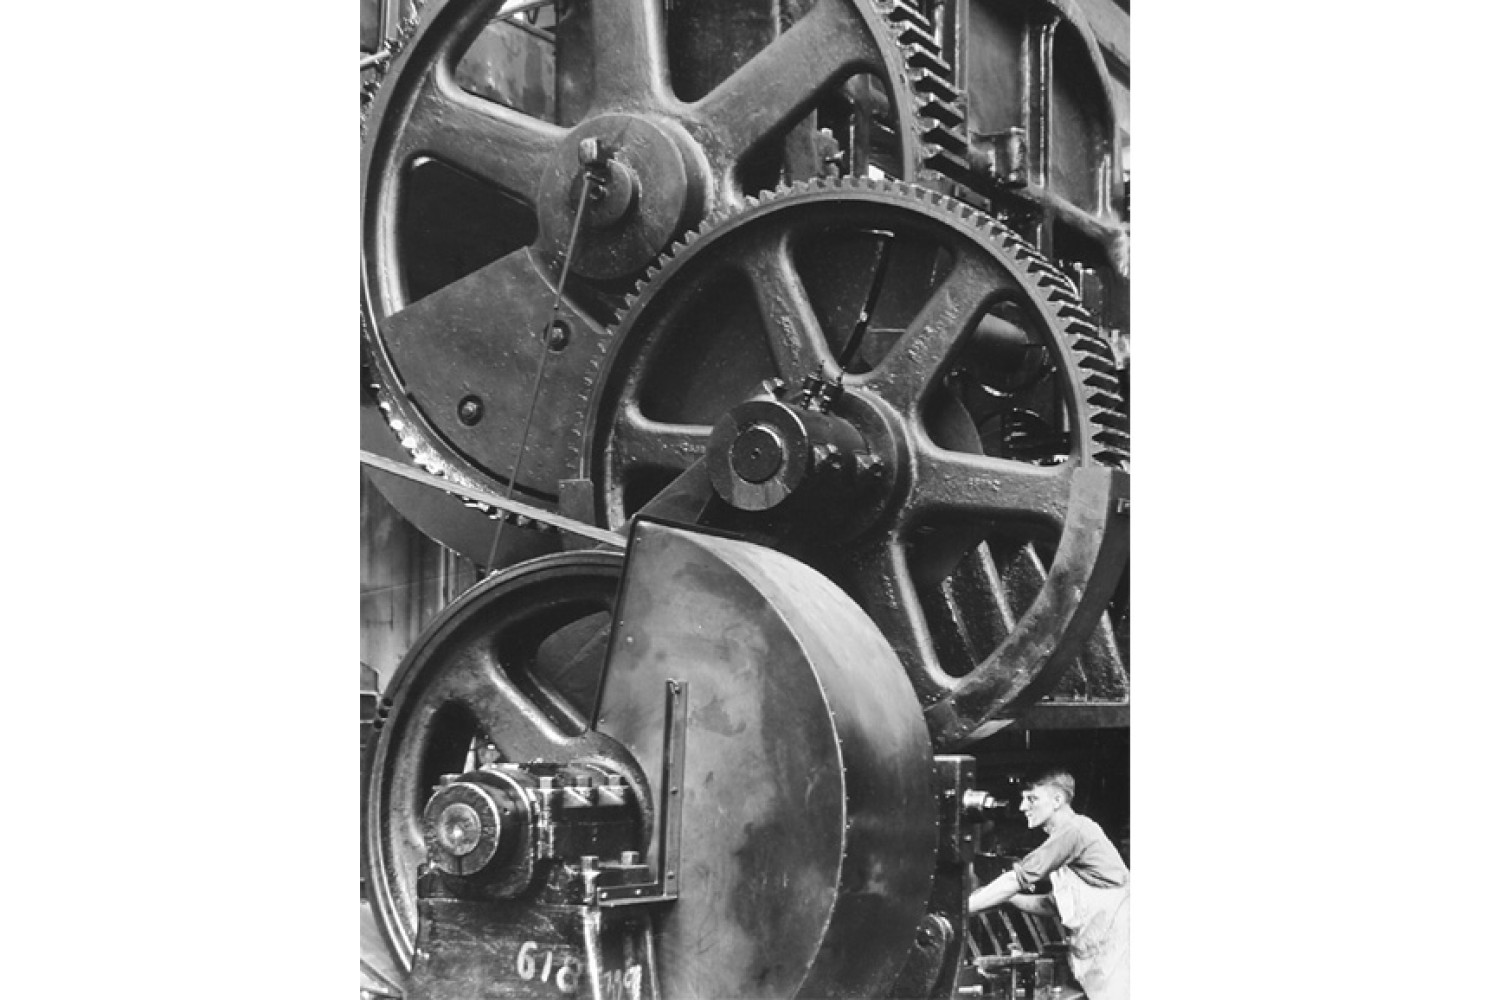 Chrysler Factory: Gear Wheels, 1929, By Margaret Bourke-White (American, 1904—1971); Gelatin silver print; Gift of Mr. Robert W. Marks; 1974.012.0163.002
